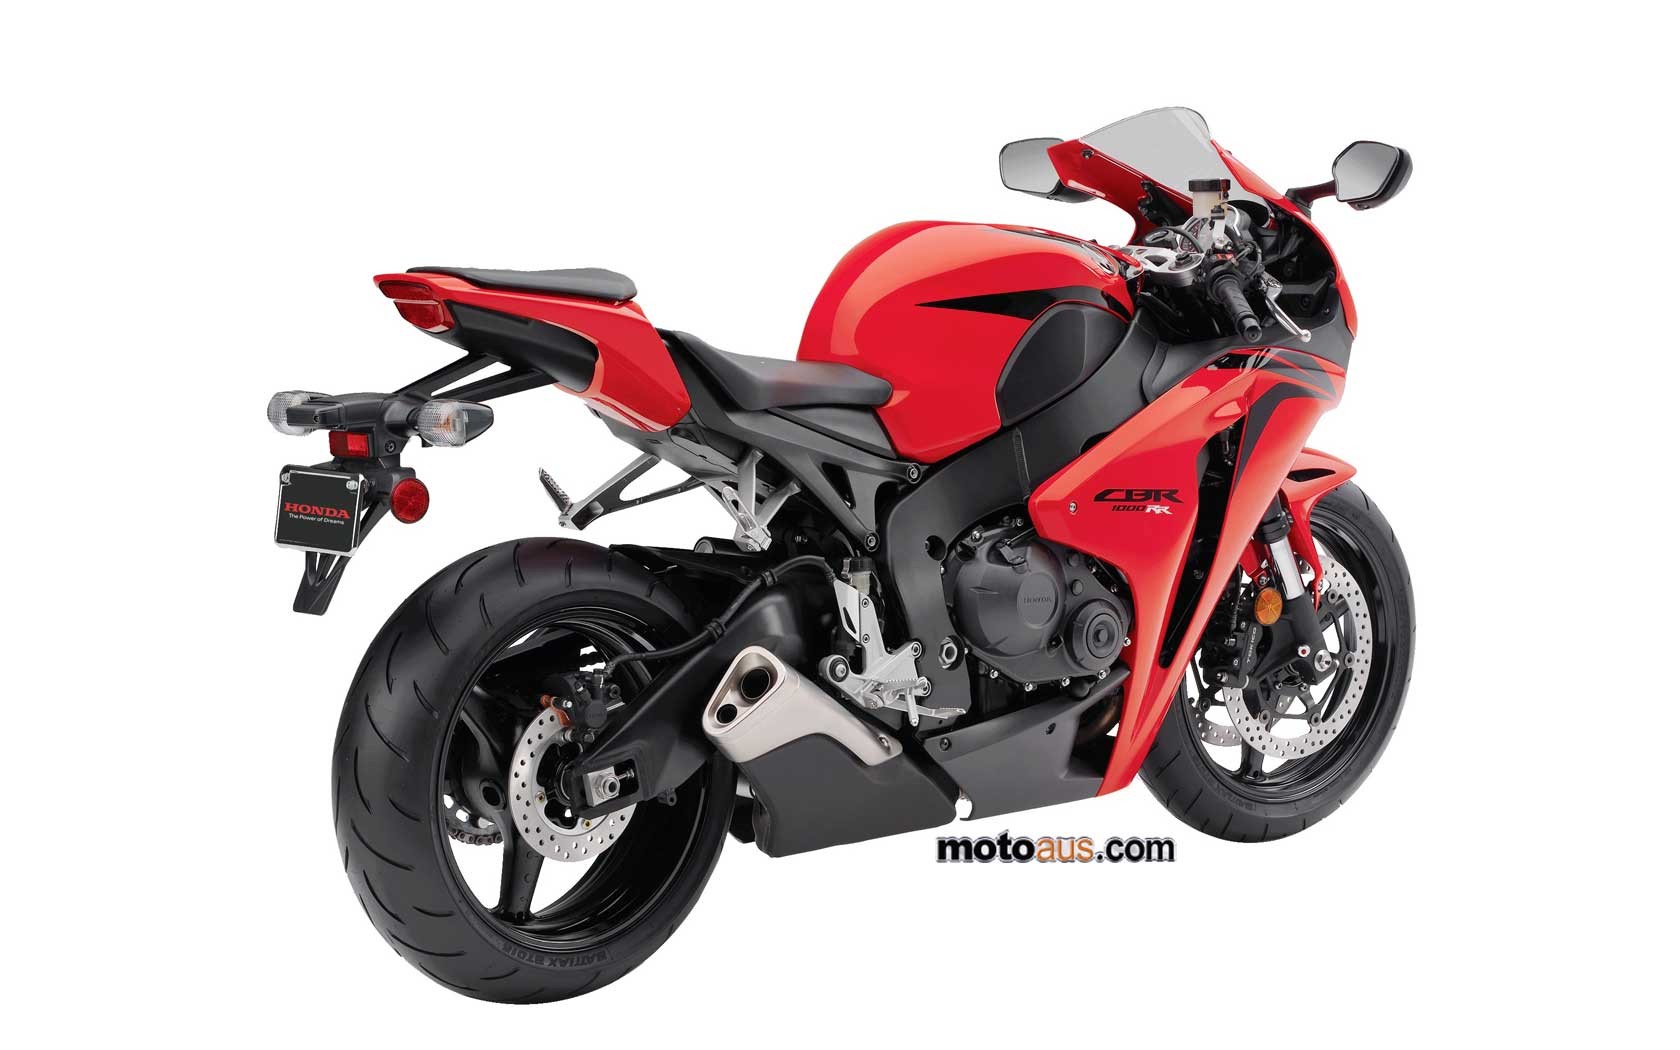 General 1680x1050 Honda motorcycle vehicle Red Motorcycles white background Japanese motorcycles Honda CBR